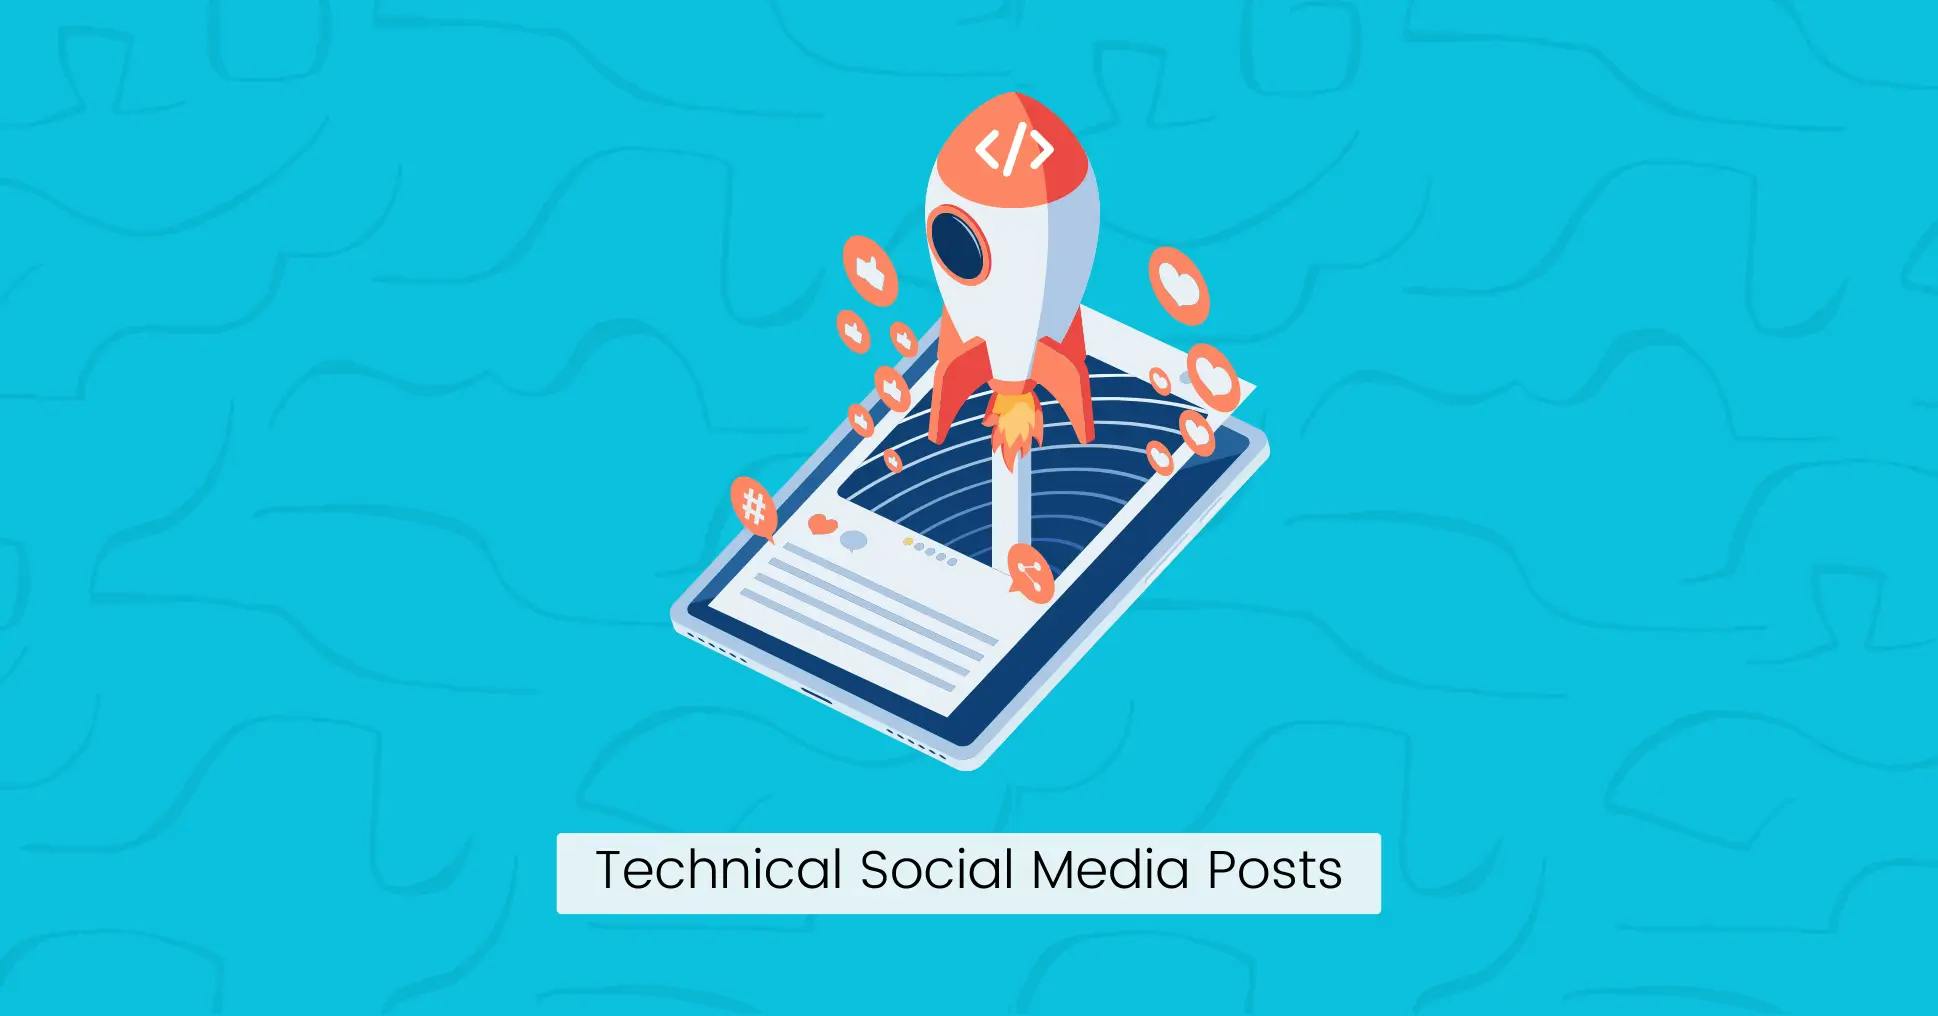 Technical Social Media Posts